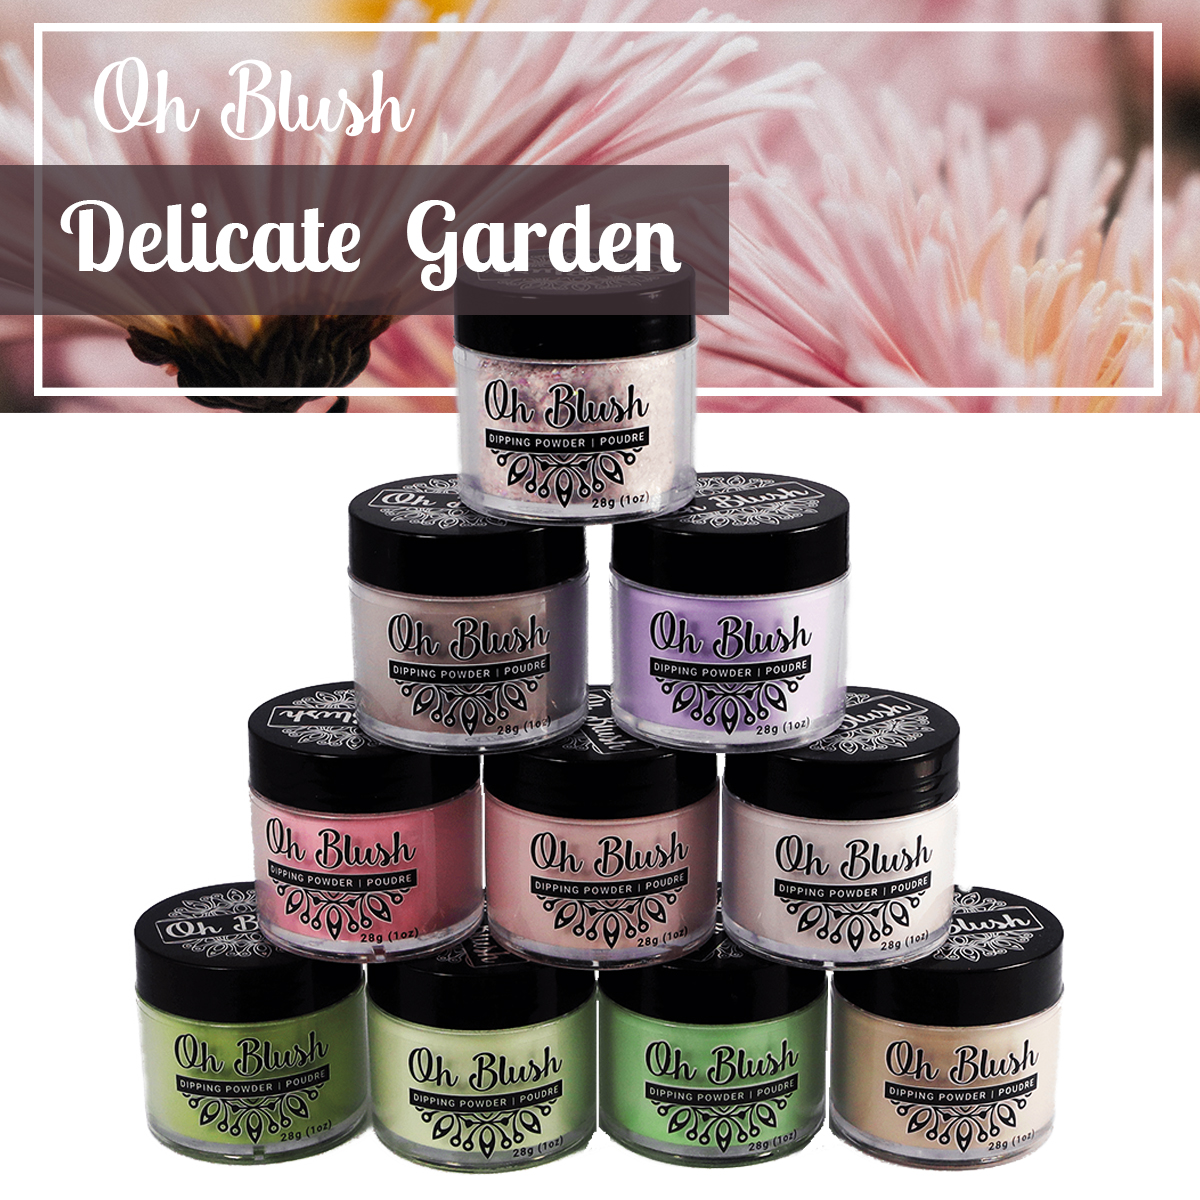 Oh Blush Poudre Collection Delicate Garden (10pcs)